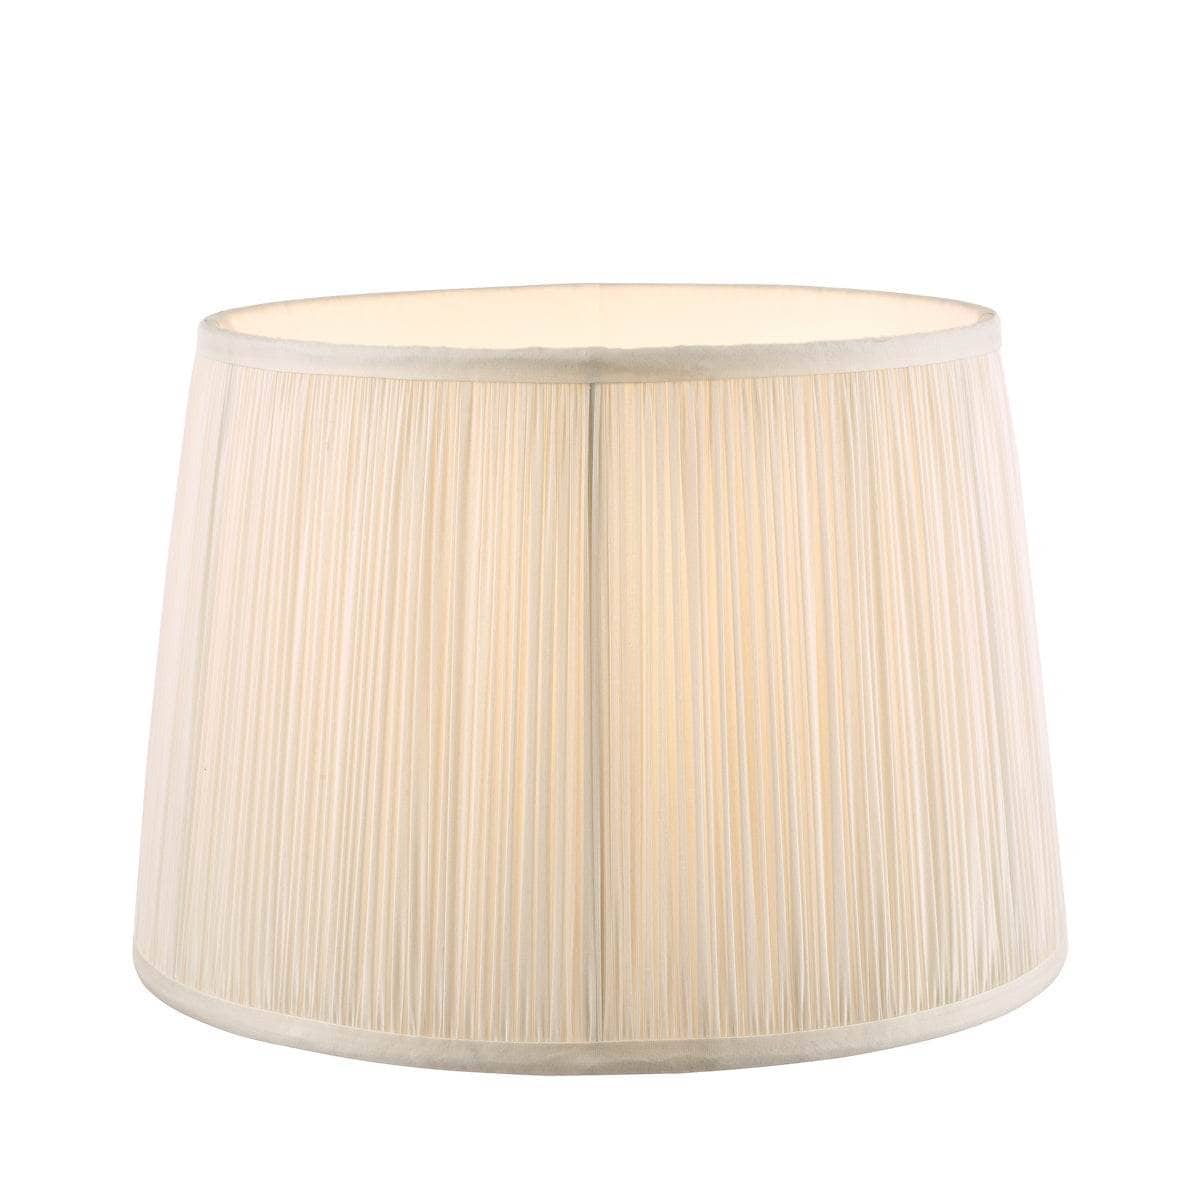 Lights  -  Laura Ashley Hemsley Pleated Silk Light Shade Cream - 12 inch  -  60006256